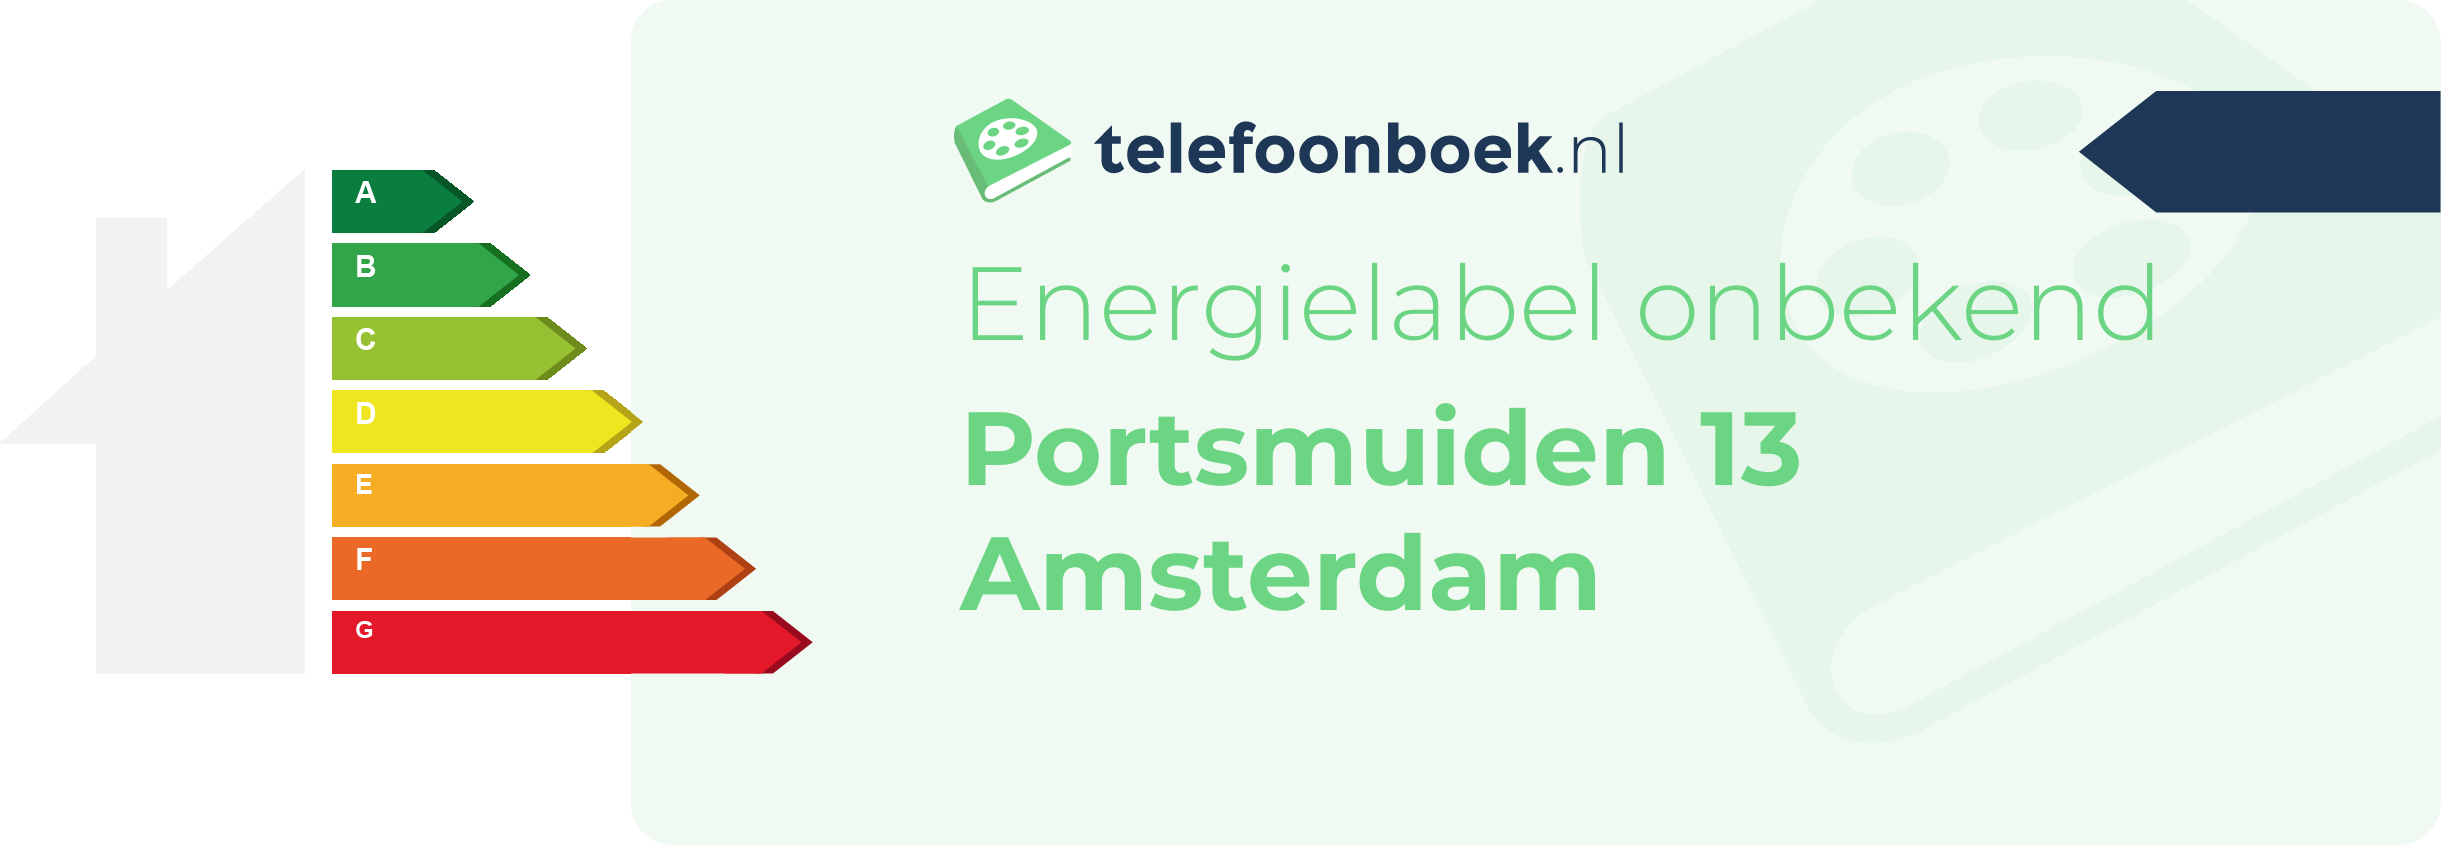 Energielabel Portsmuiden 13 Amsterdam